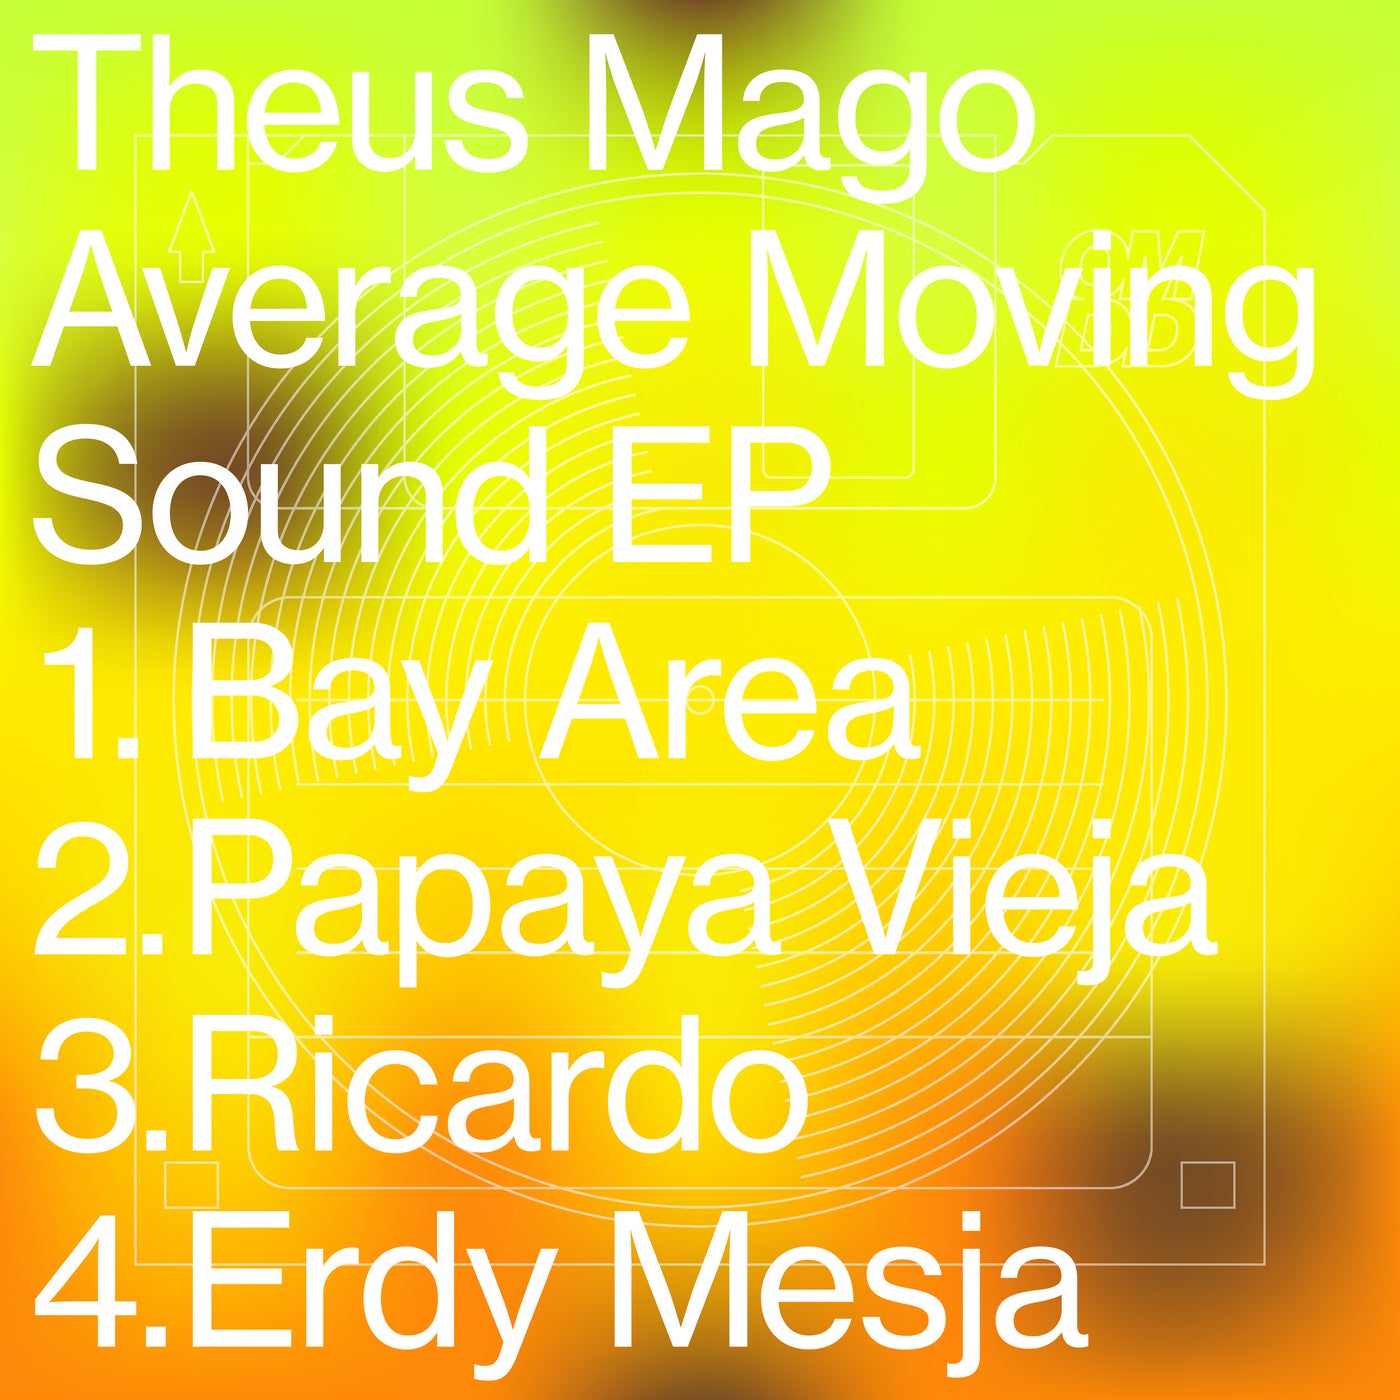 Download Average Moving Sound EP on Electrobuzz